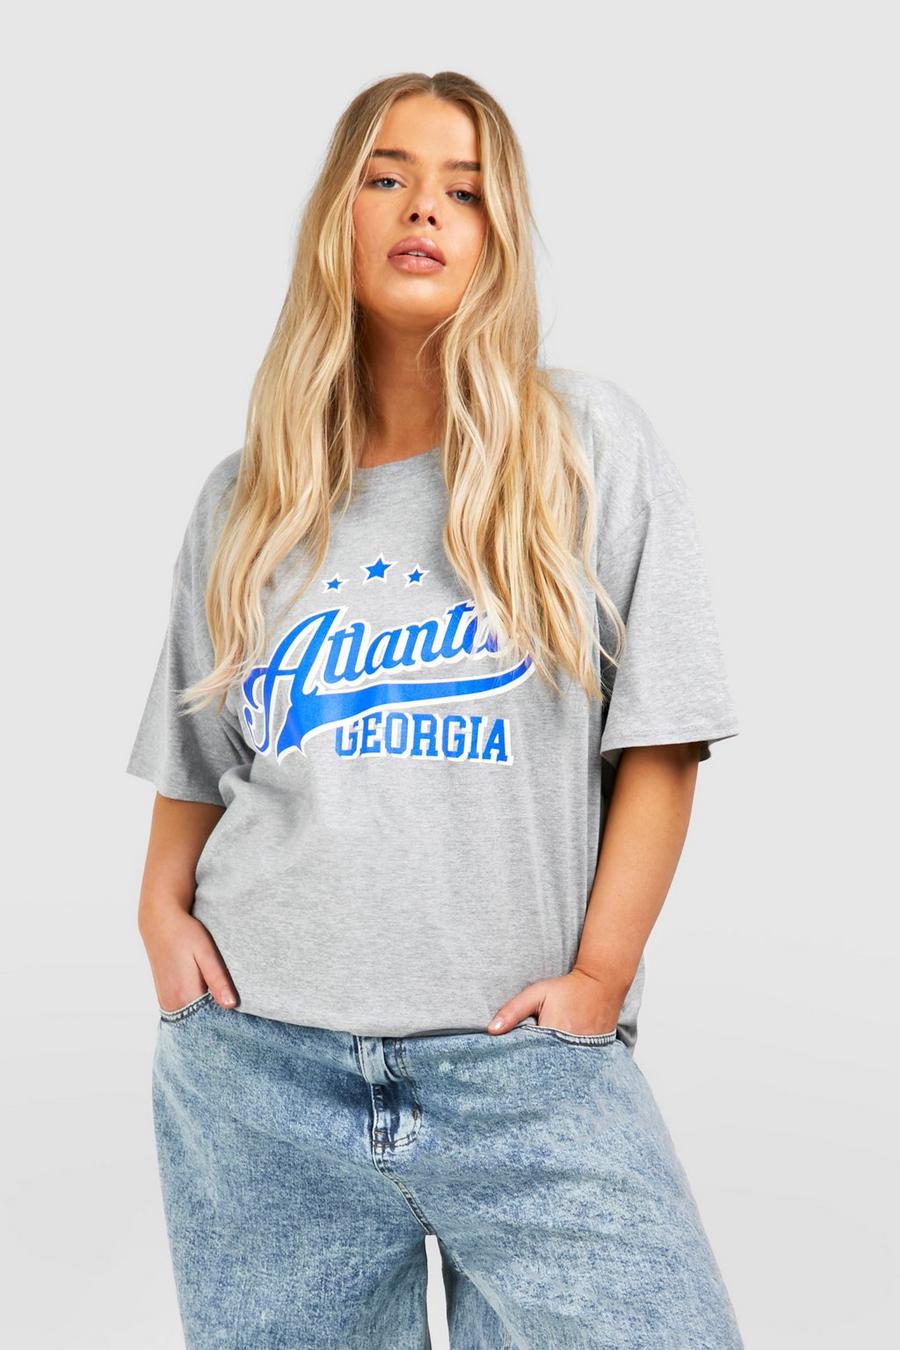 Plus T-Shirt mit Atlanta Georgia Print, Grey